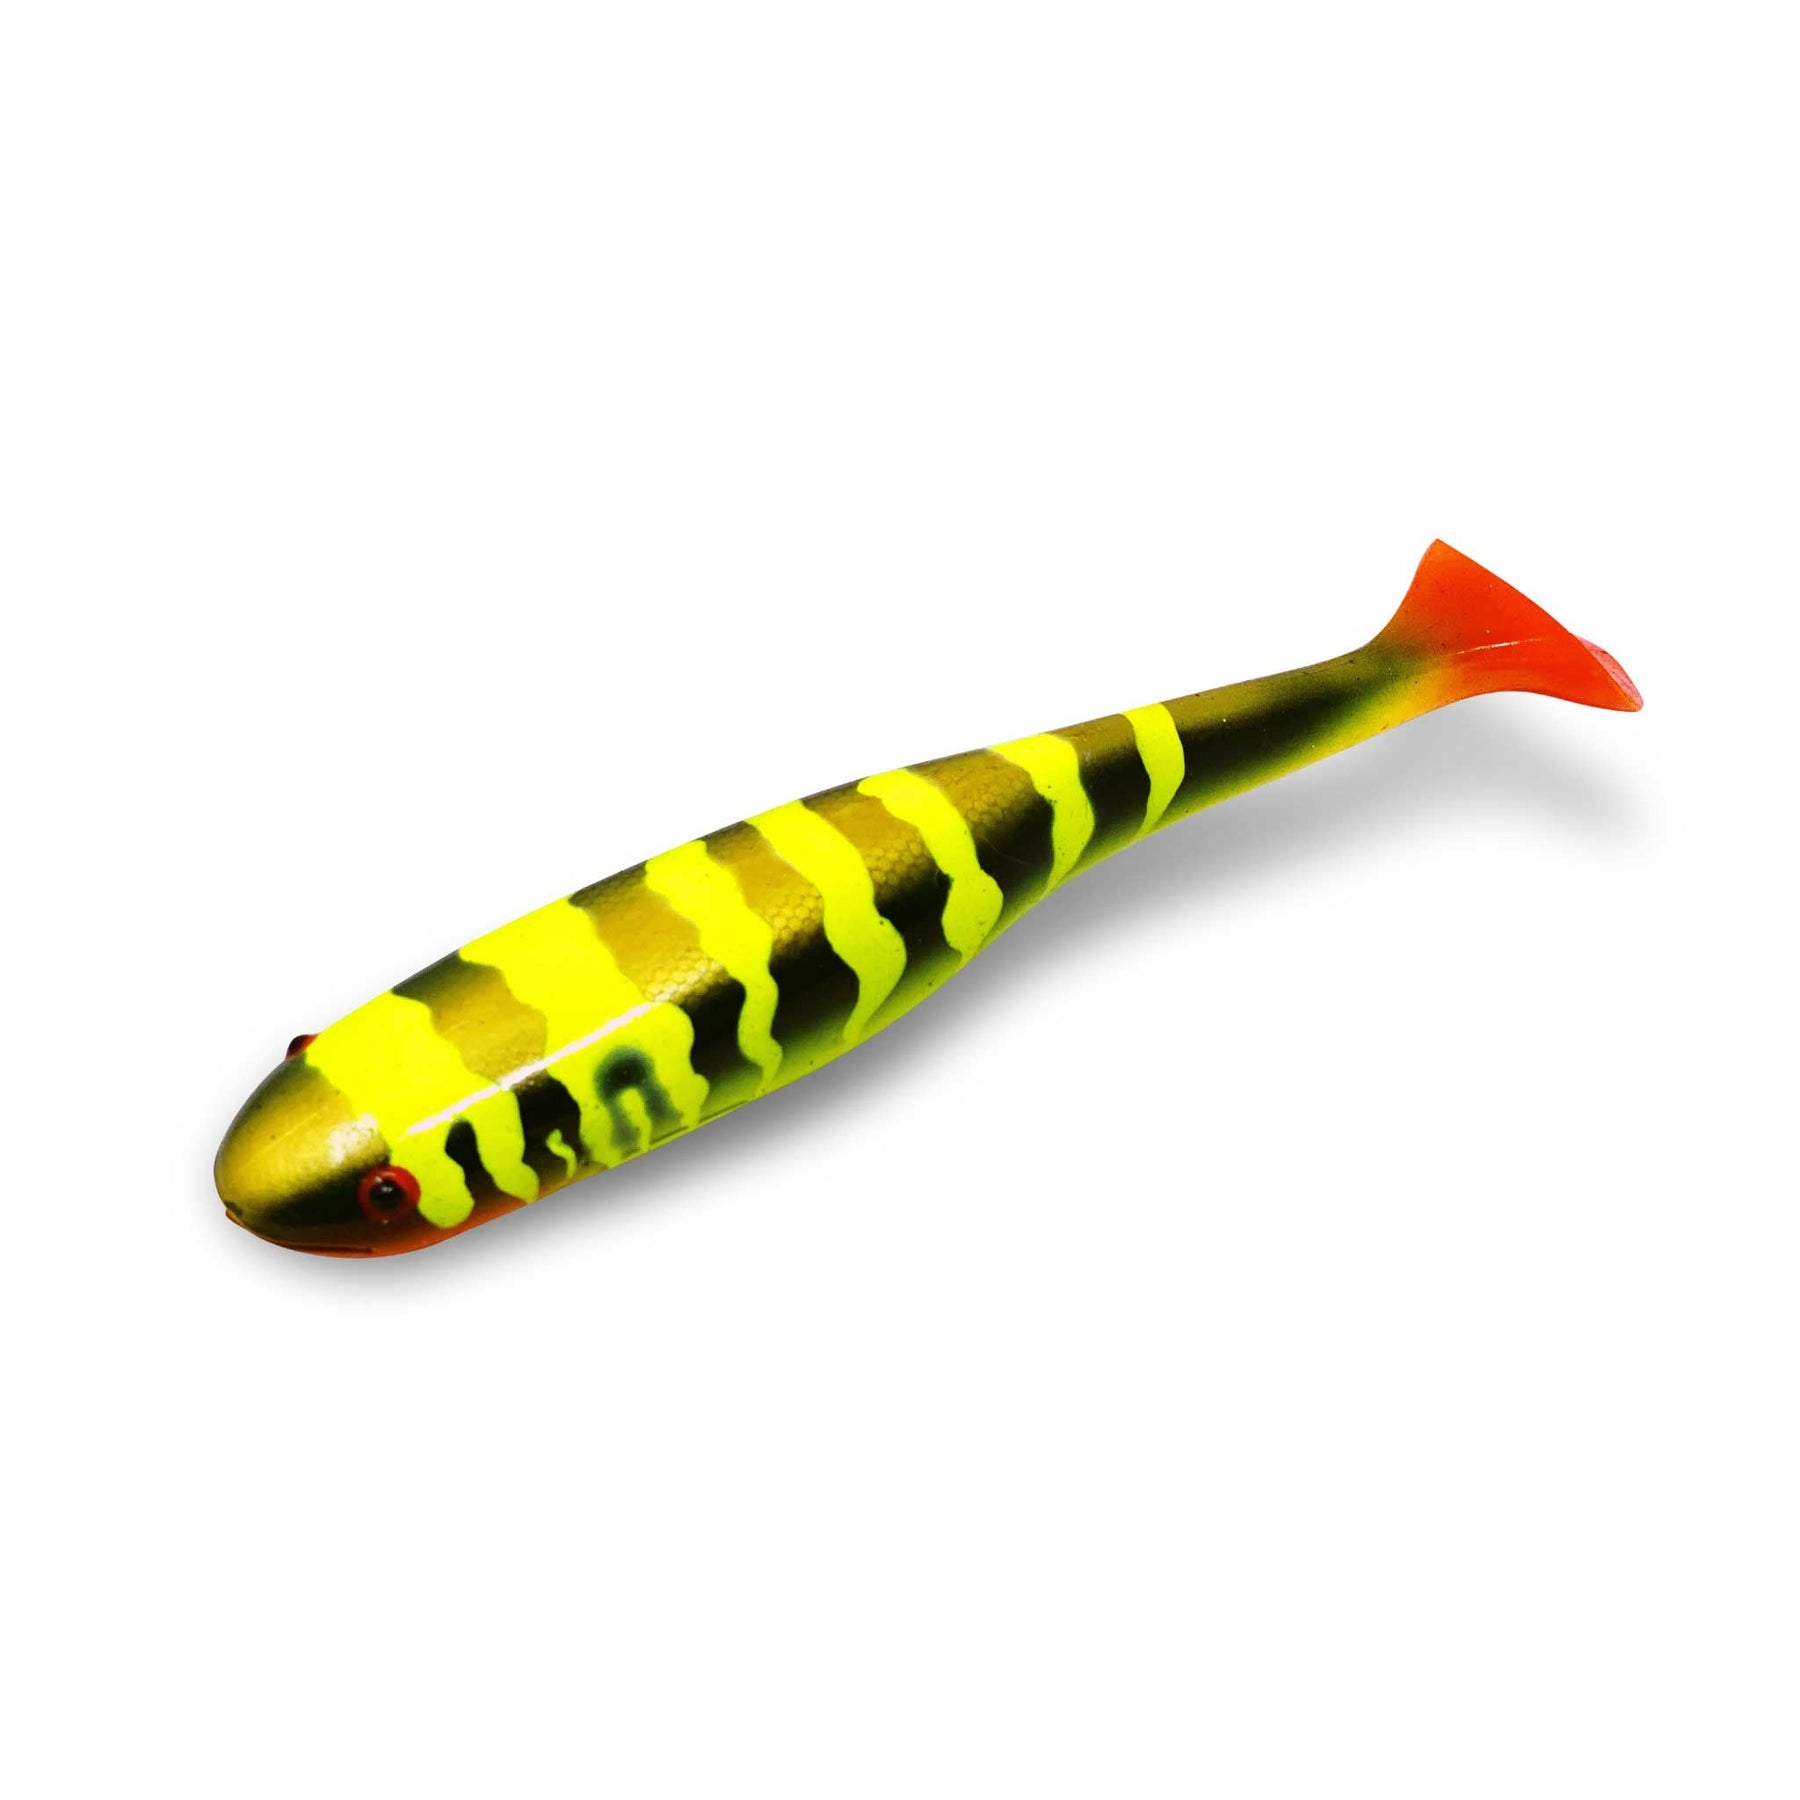 Gator Catfish Paddle Swimbait | Pike & Musky lures Hot Burbot UV